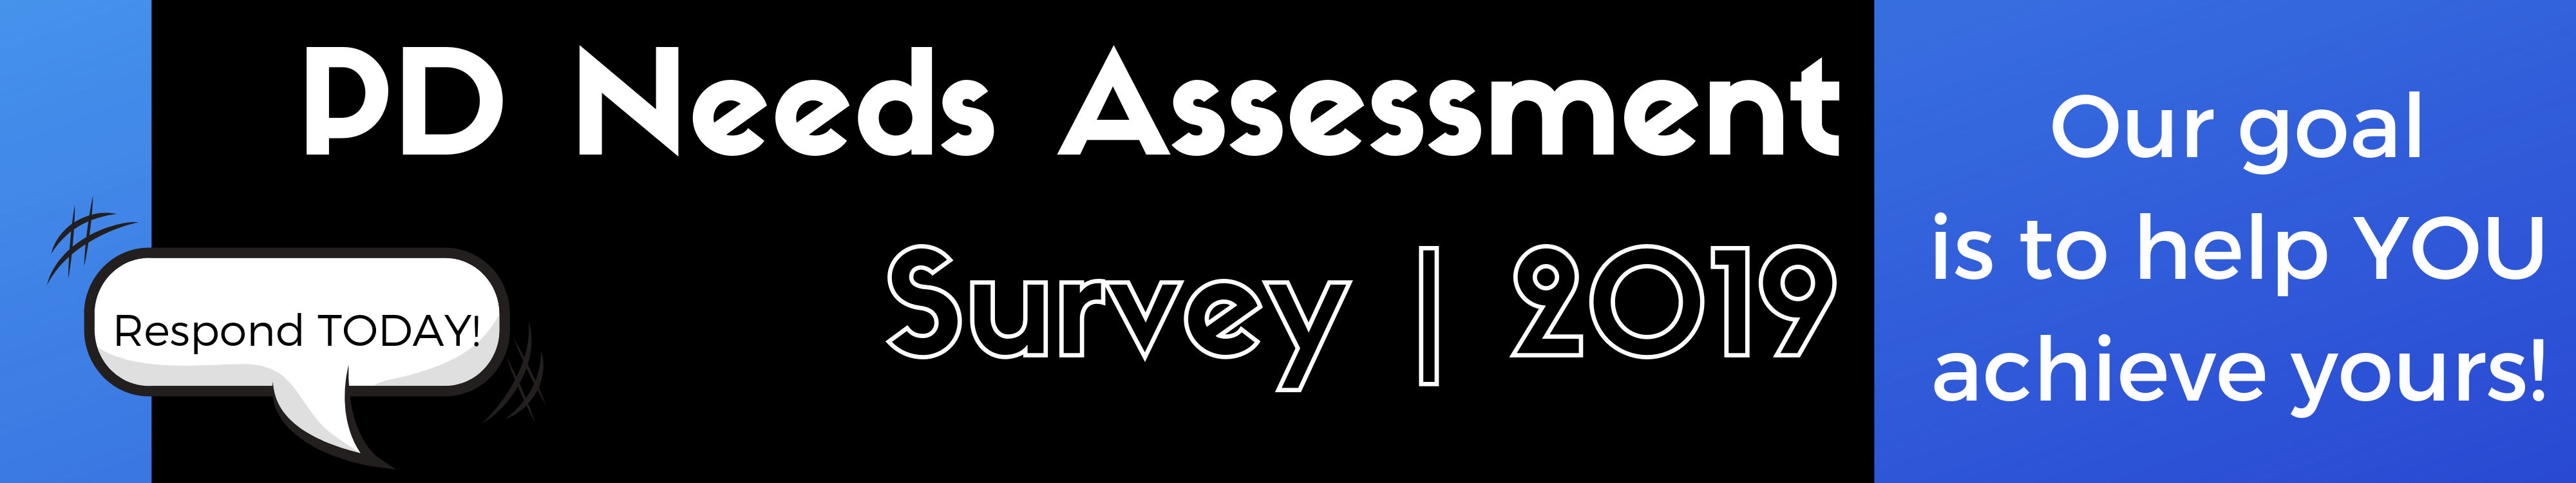 PD-Needs-Assessment-2019.png